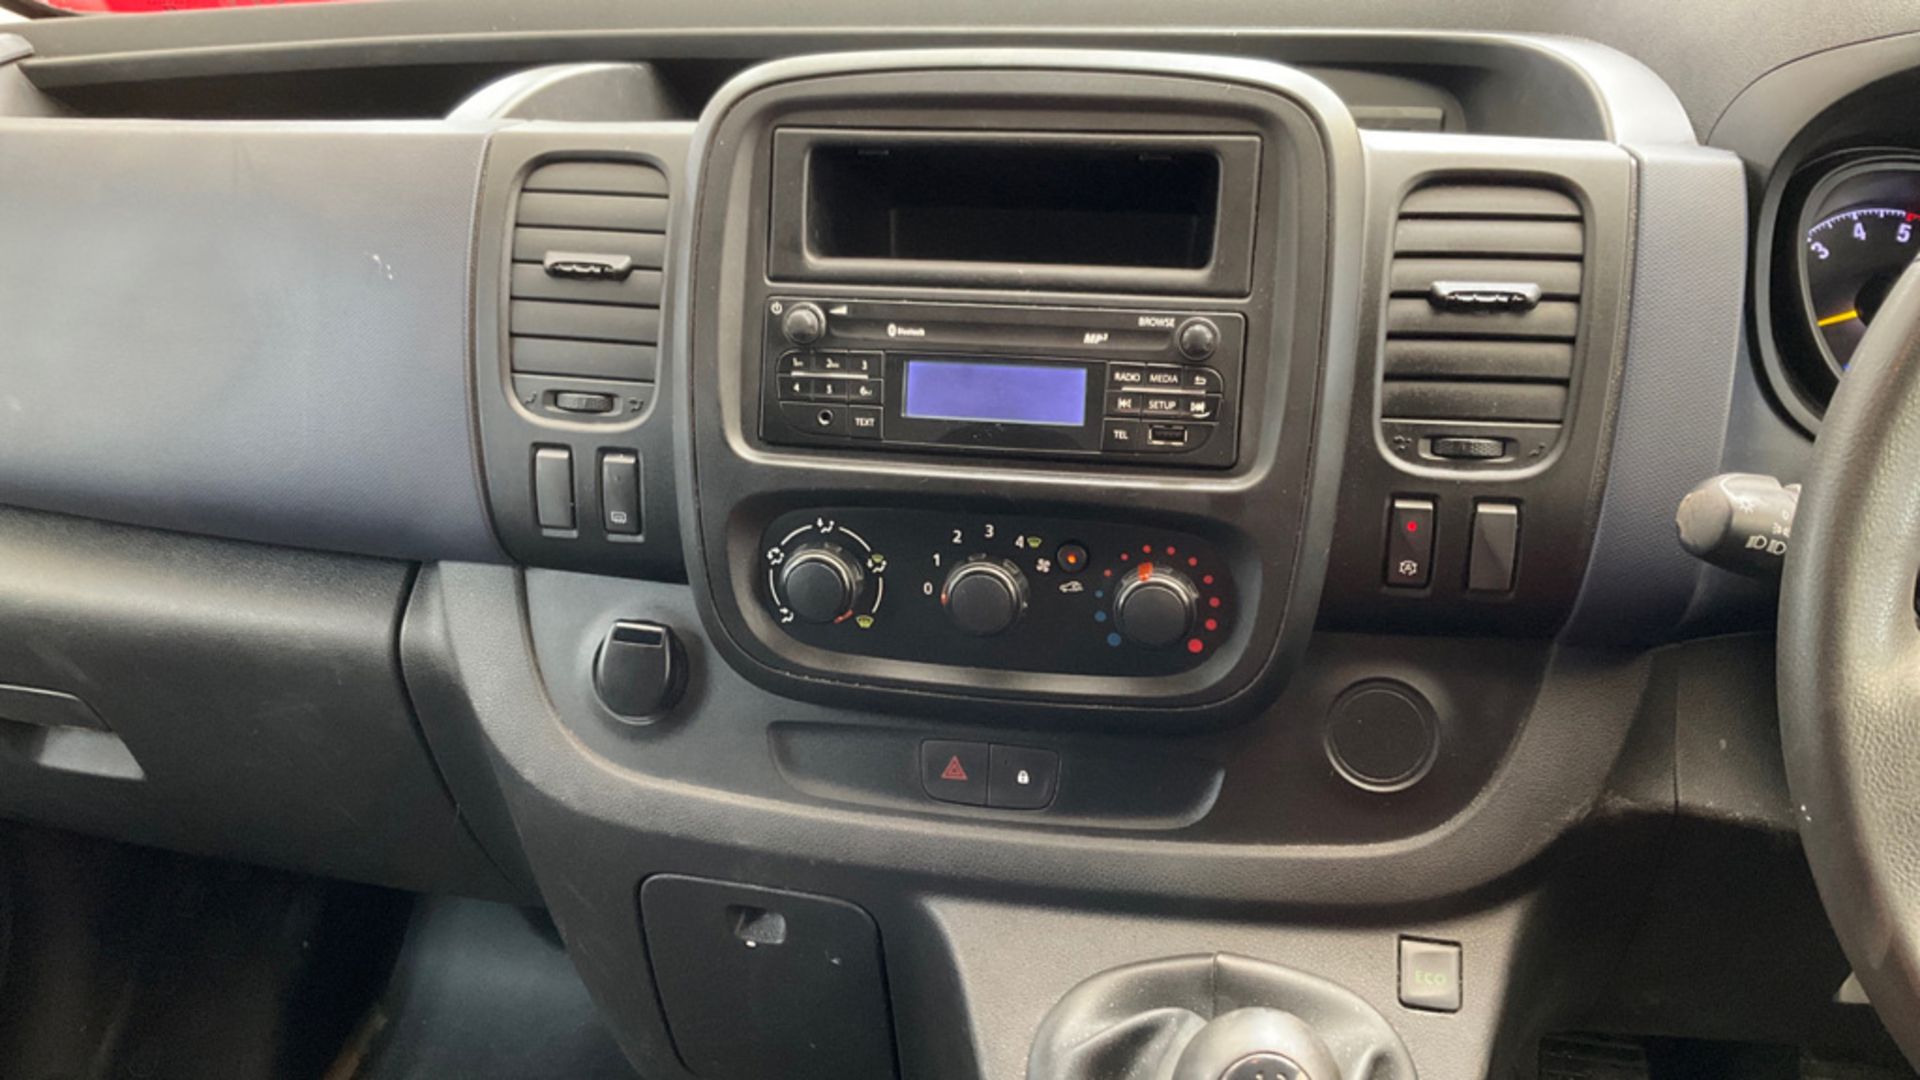 ** ON SALE ** Vauxhall Vivaro 1.6 Cdti 90 Ecoflex 2.9T H1L1 2015 '15 Reg'-Parking Sensors-Bluetooth - Image 8 of 9